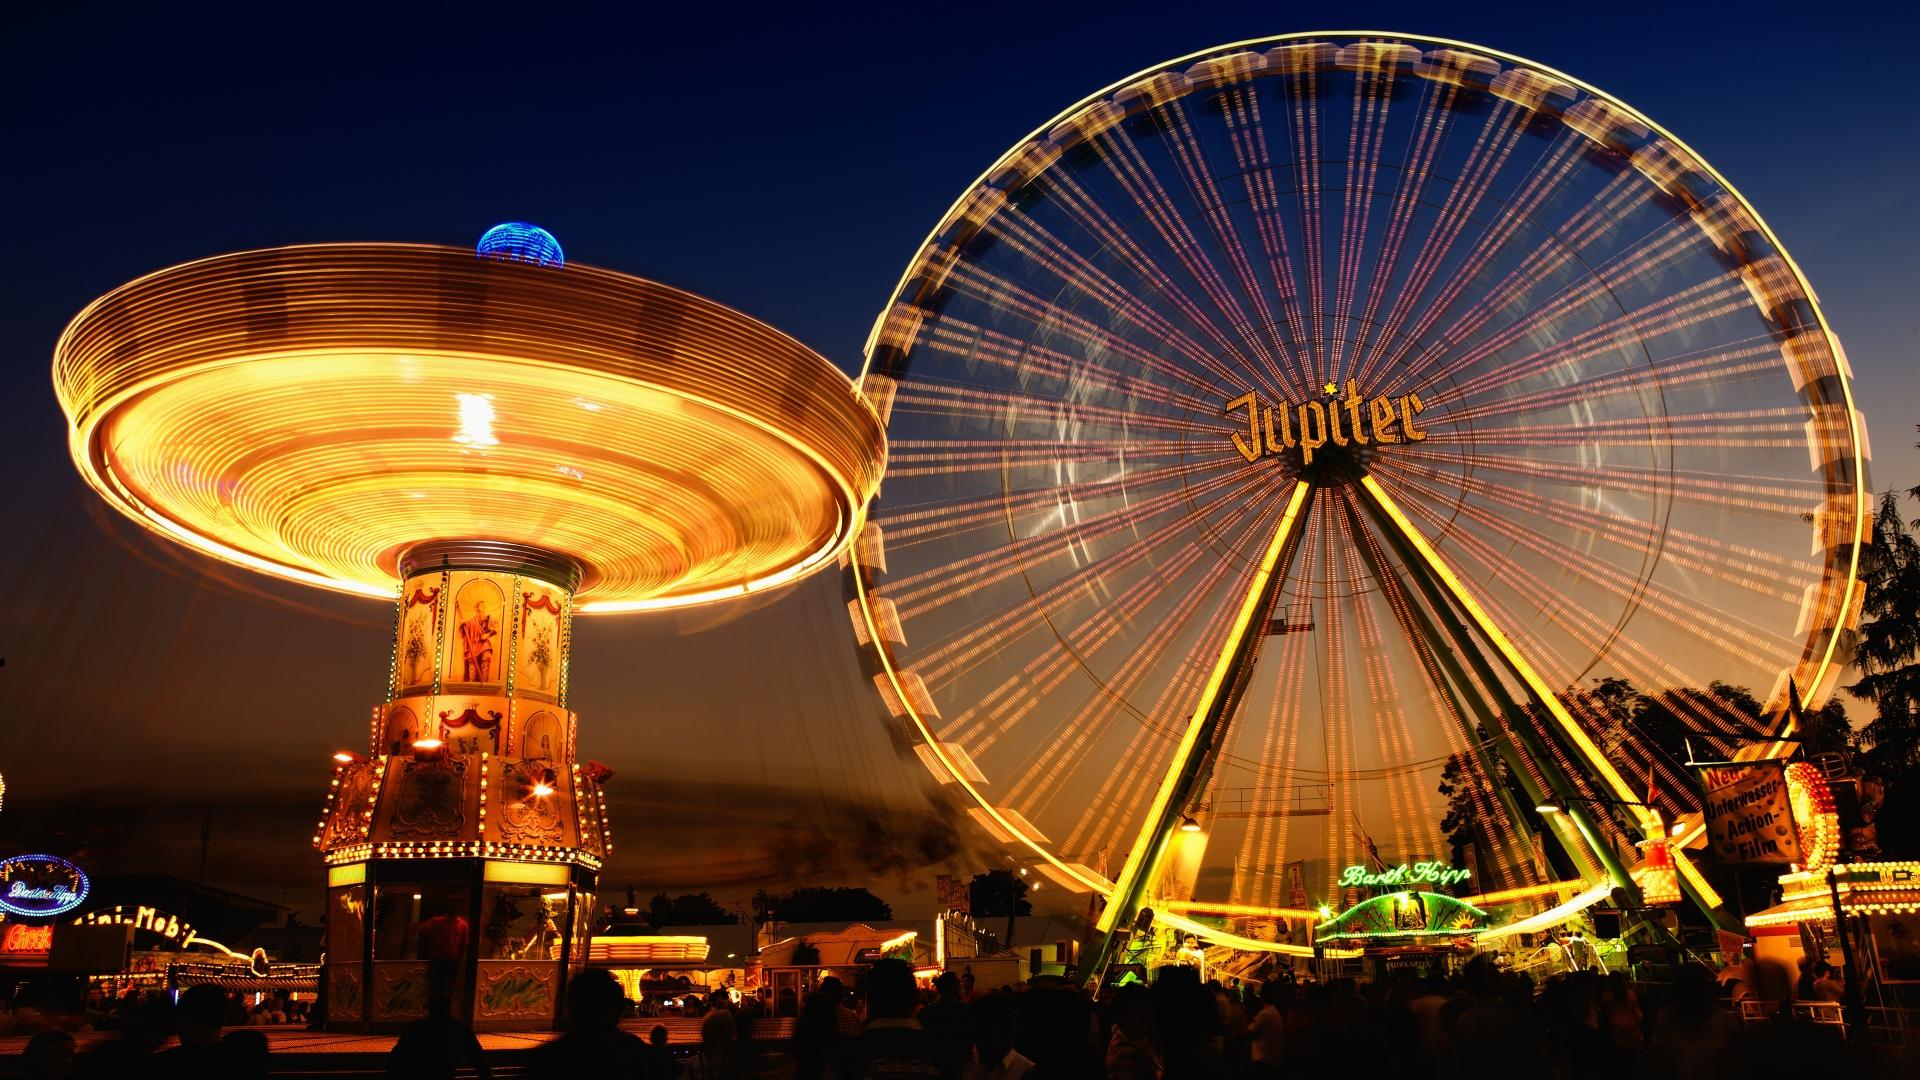 Jupiter Ferris Wheel Fair Wallpaper in jpg format for free download